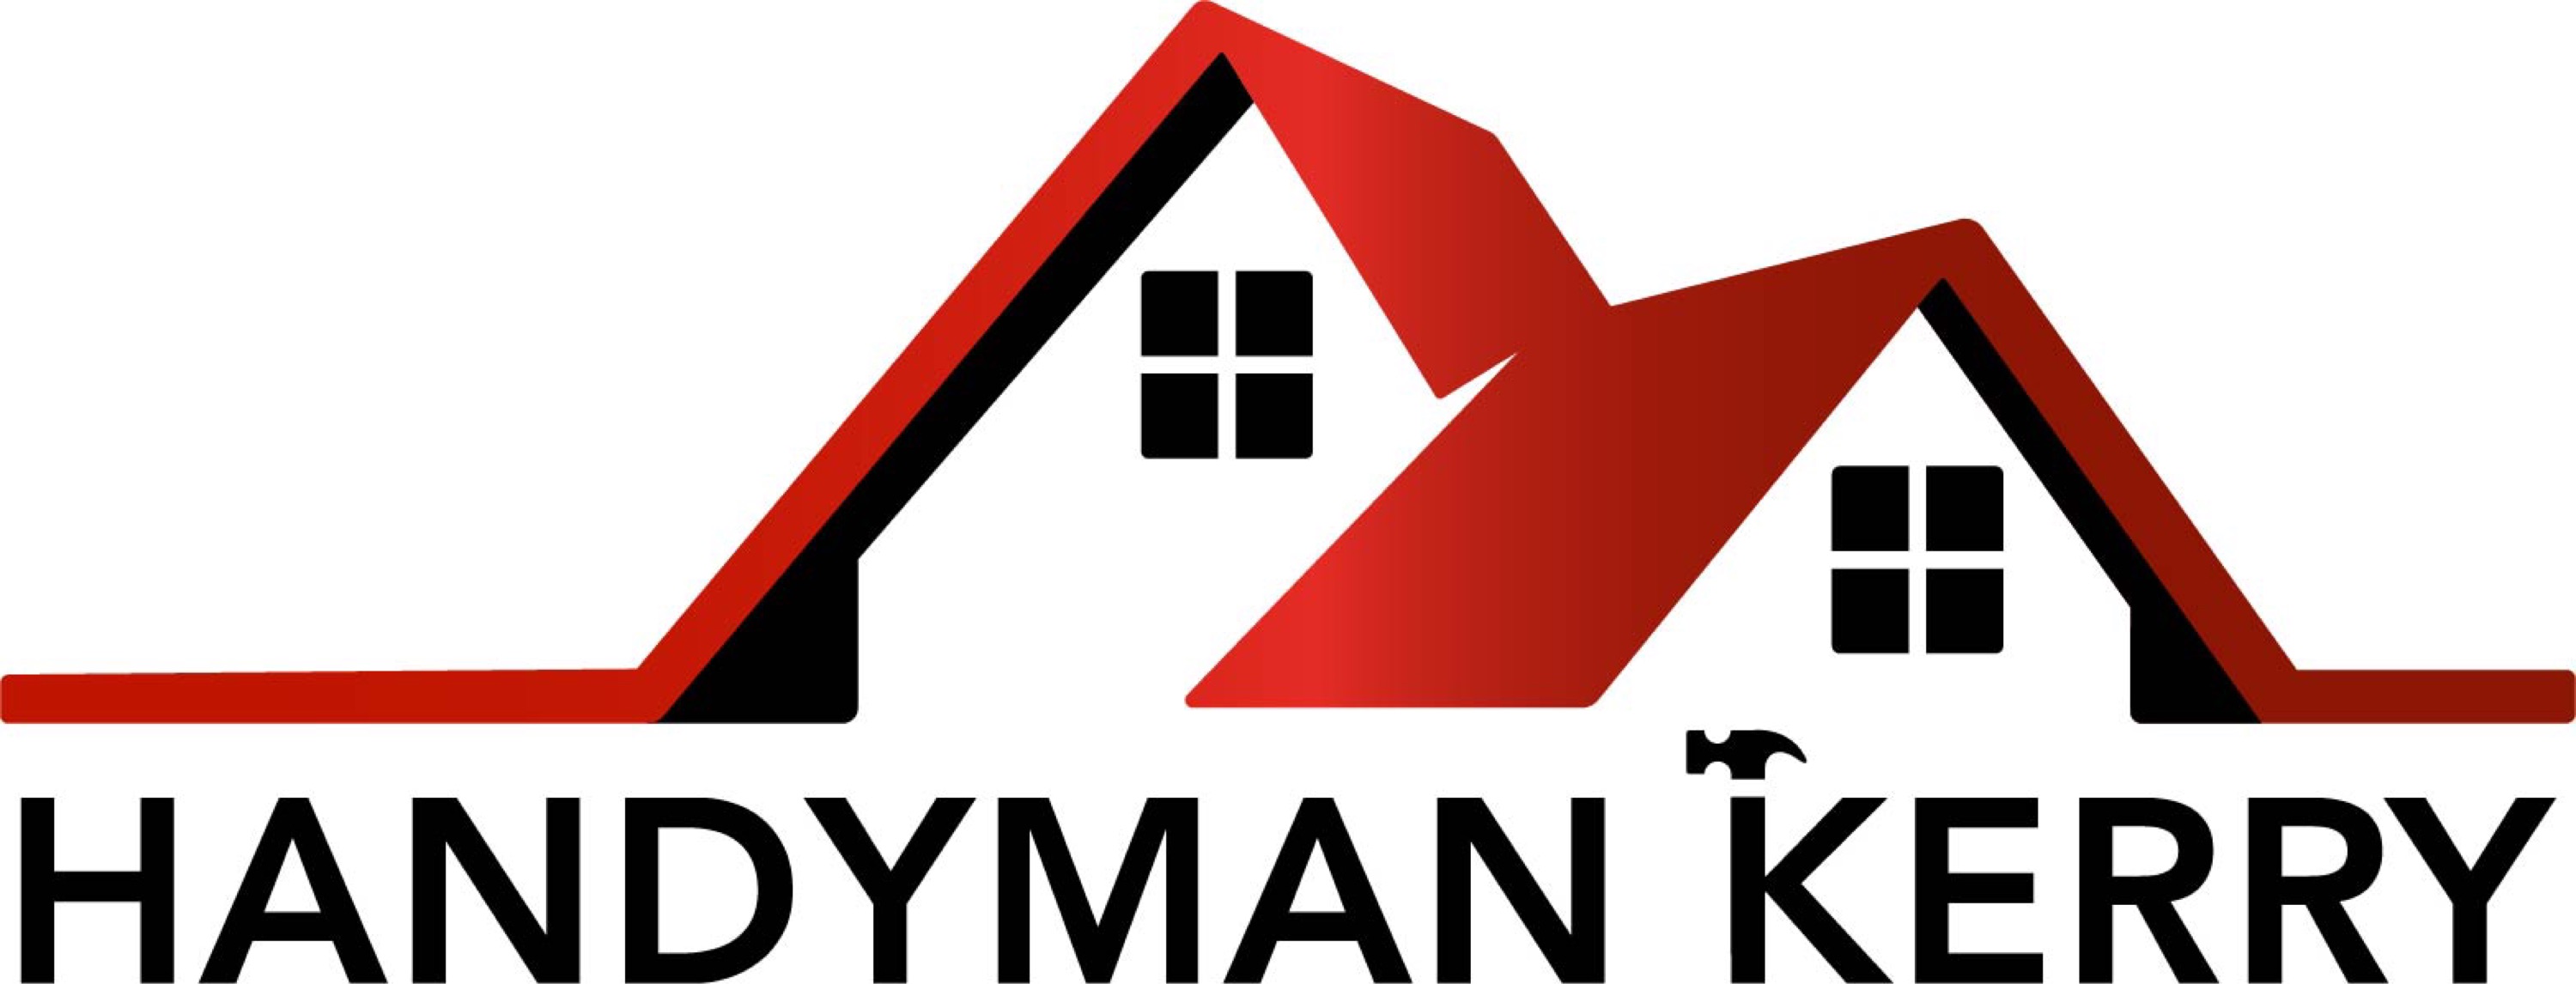 Handyman Kerry Logo